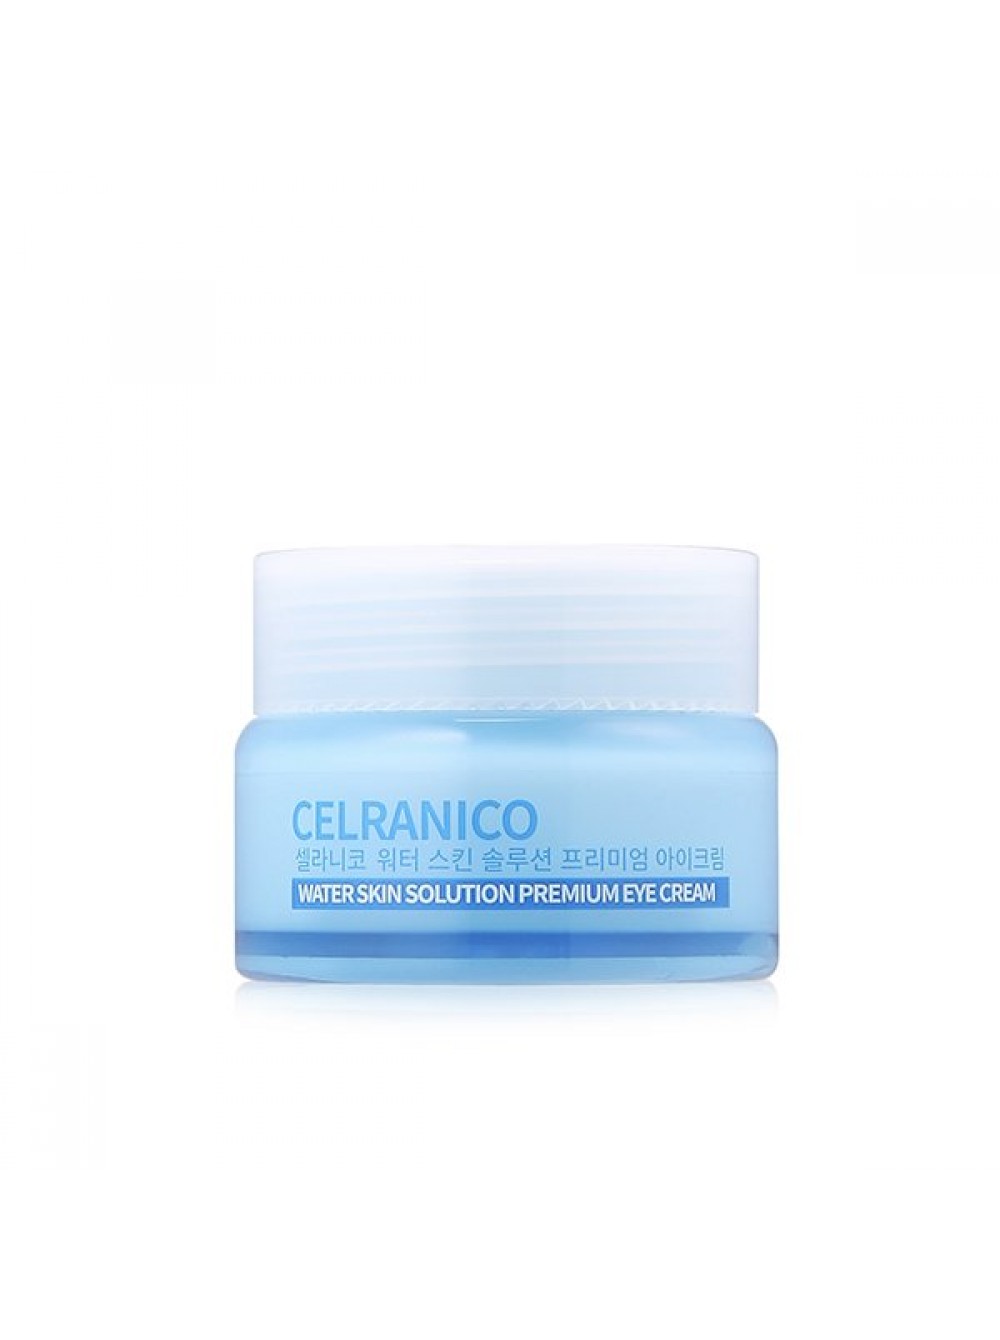 Celranico. Celranico интенсивно увлажняющий крем для кожи вокруг глаз Deep Moisturizing Aqua Eye Cream. Celranico Silky Soft spicule Cream. Крем Moisturizing Cream Корея вокруг глаз отзывы. Skin solution ccc